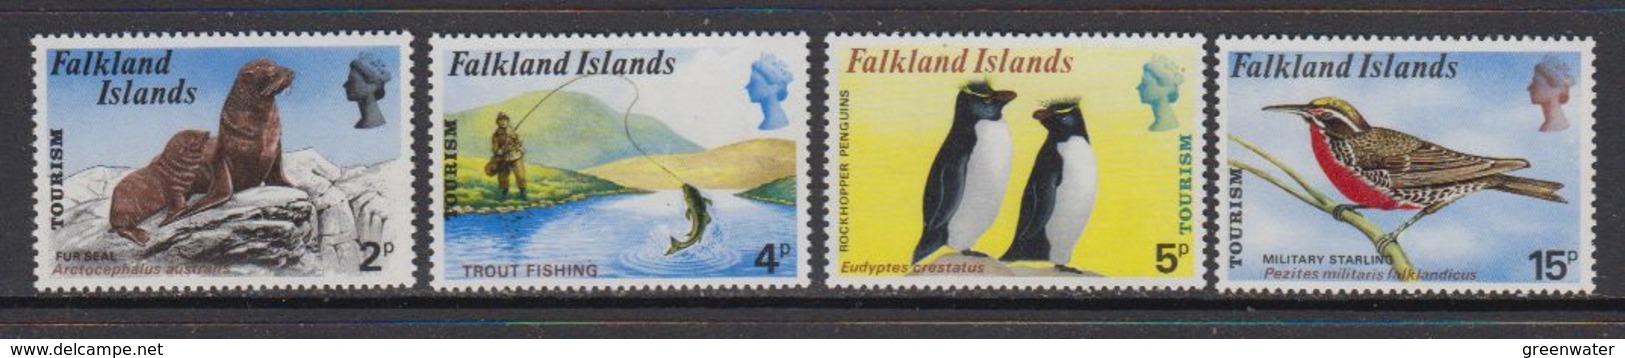 Falkland Islands 1974 Tourism 4v ** Mnh (41748) - Falklandeilanden